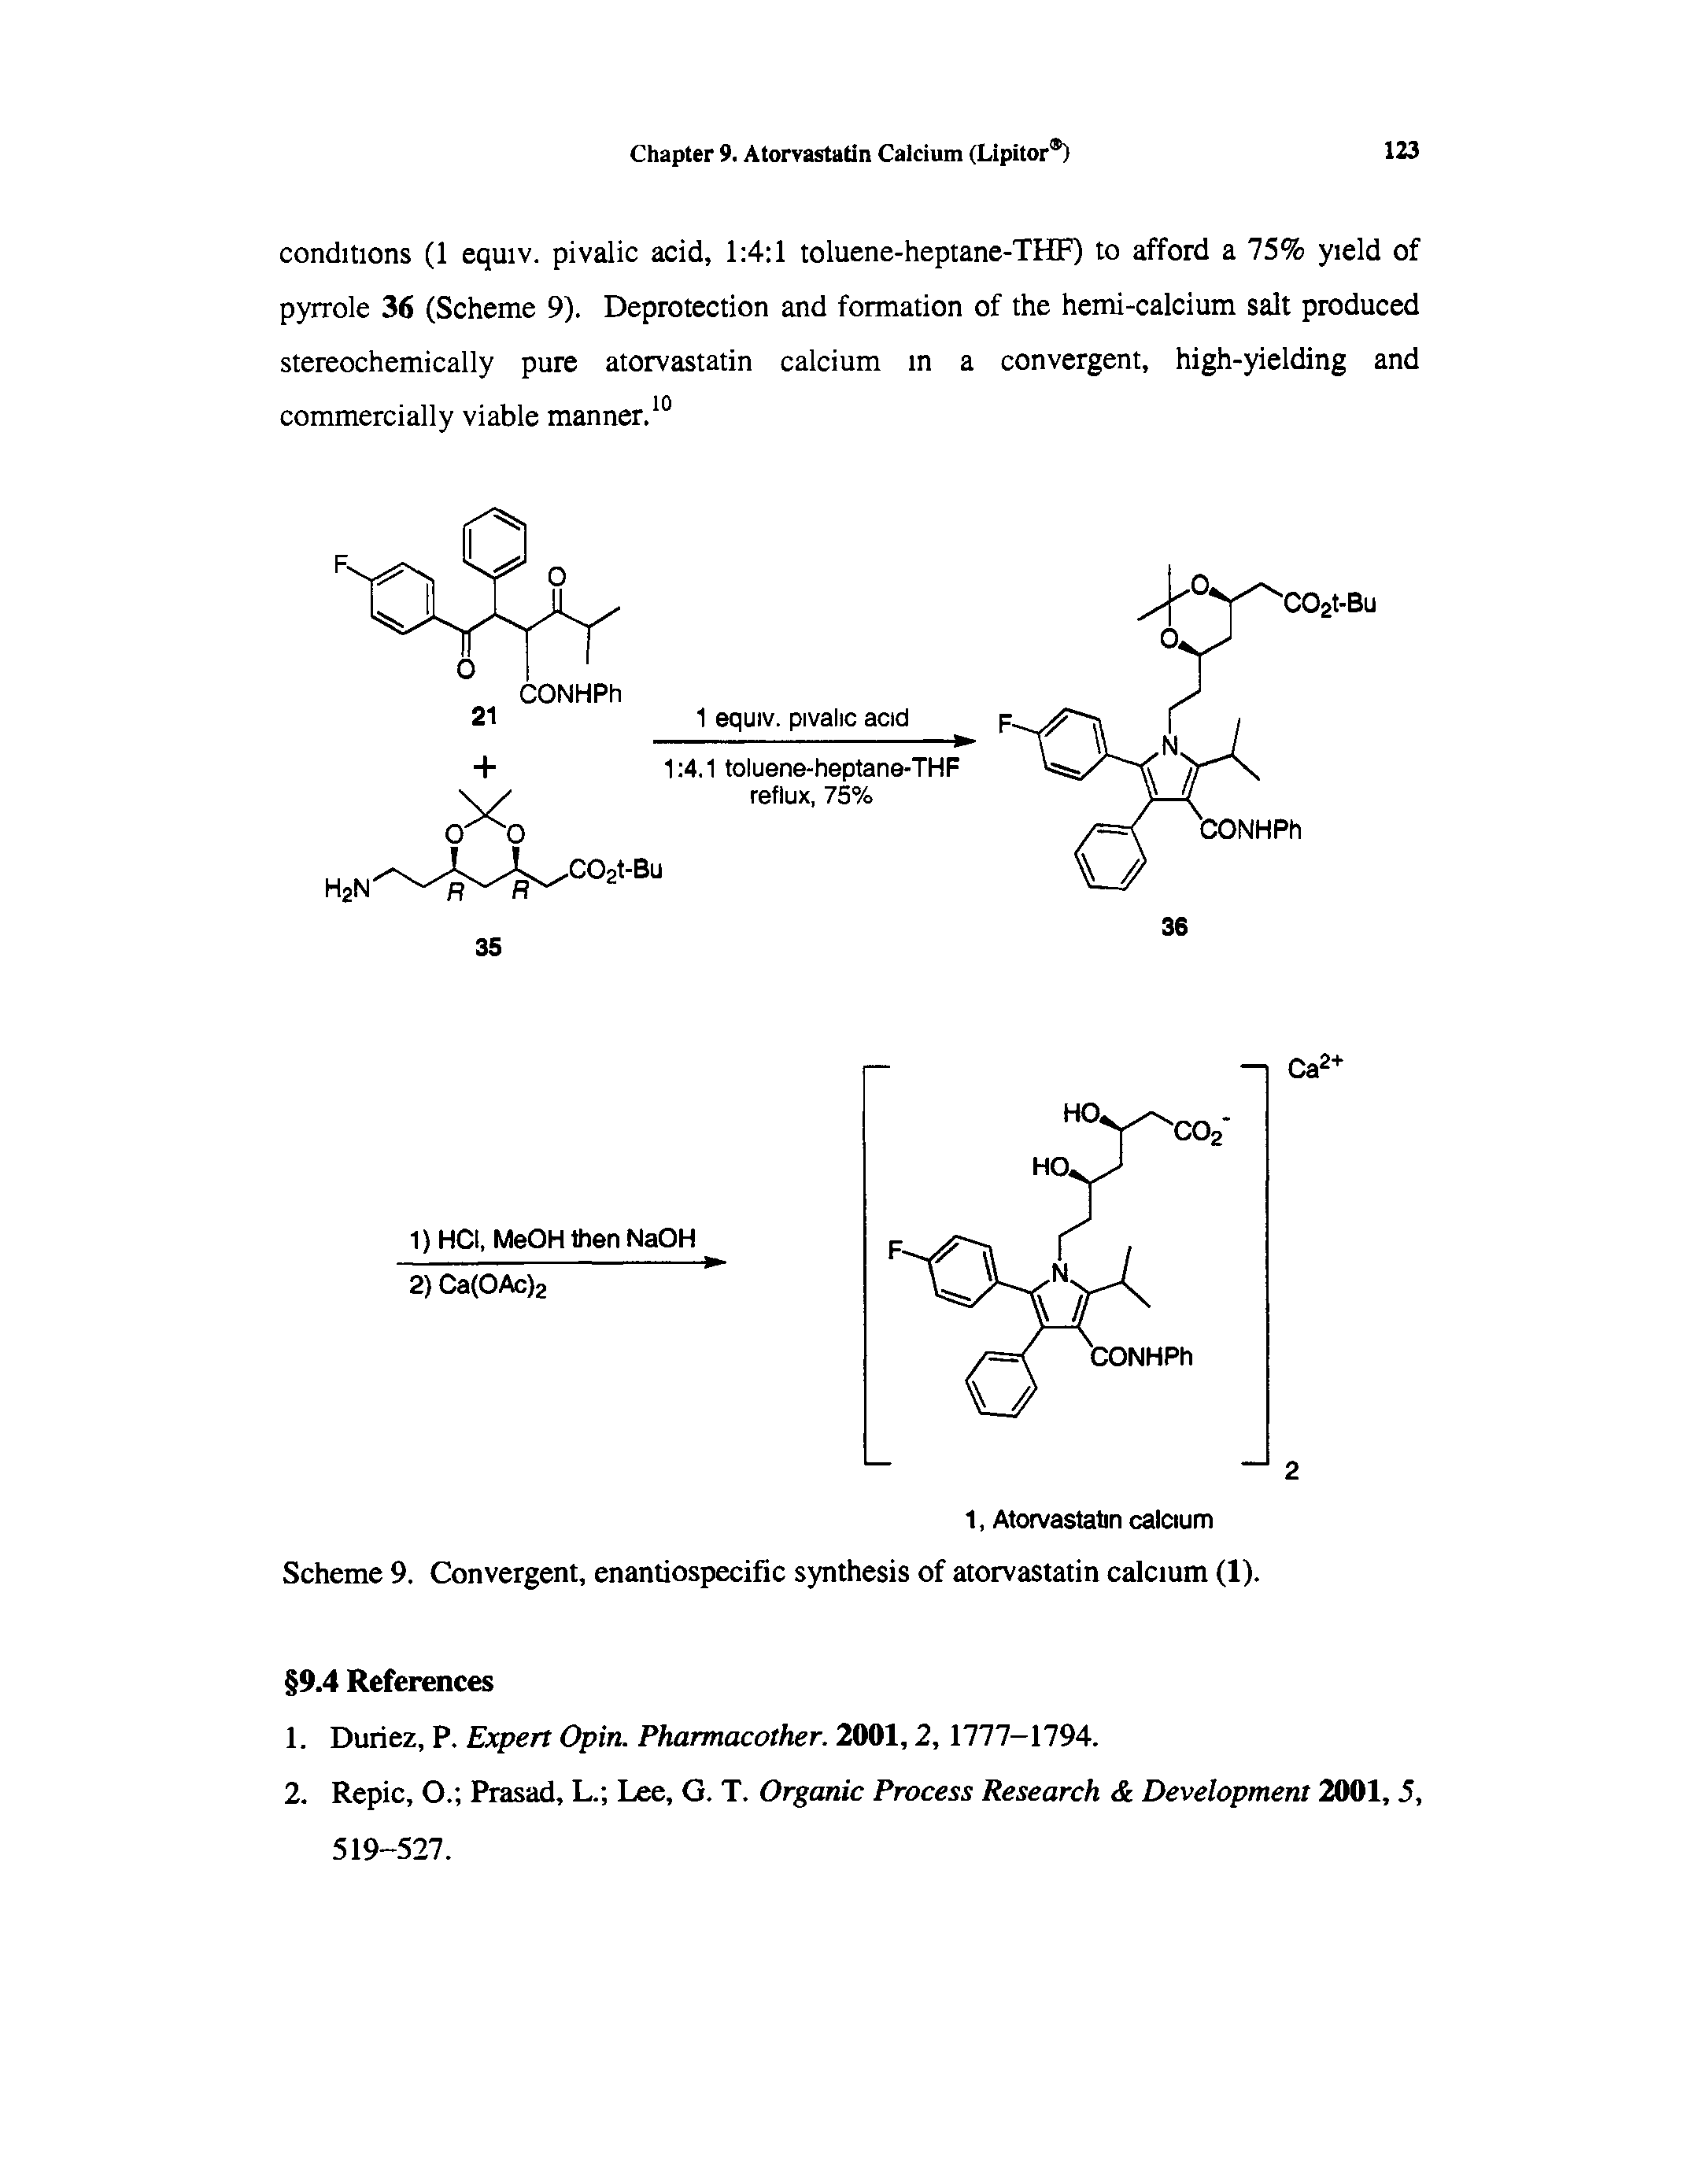 Scheme 9. Convergent, enantiospecific synthesis of atorvastatin calcium (1).